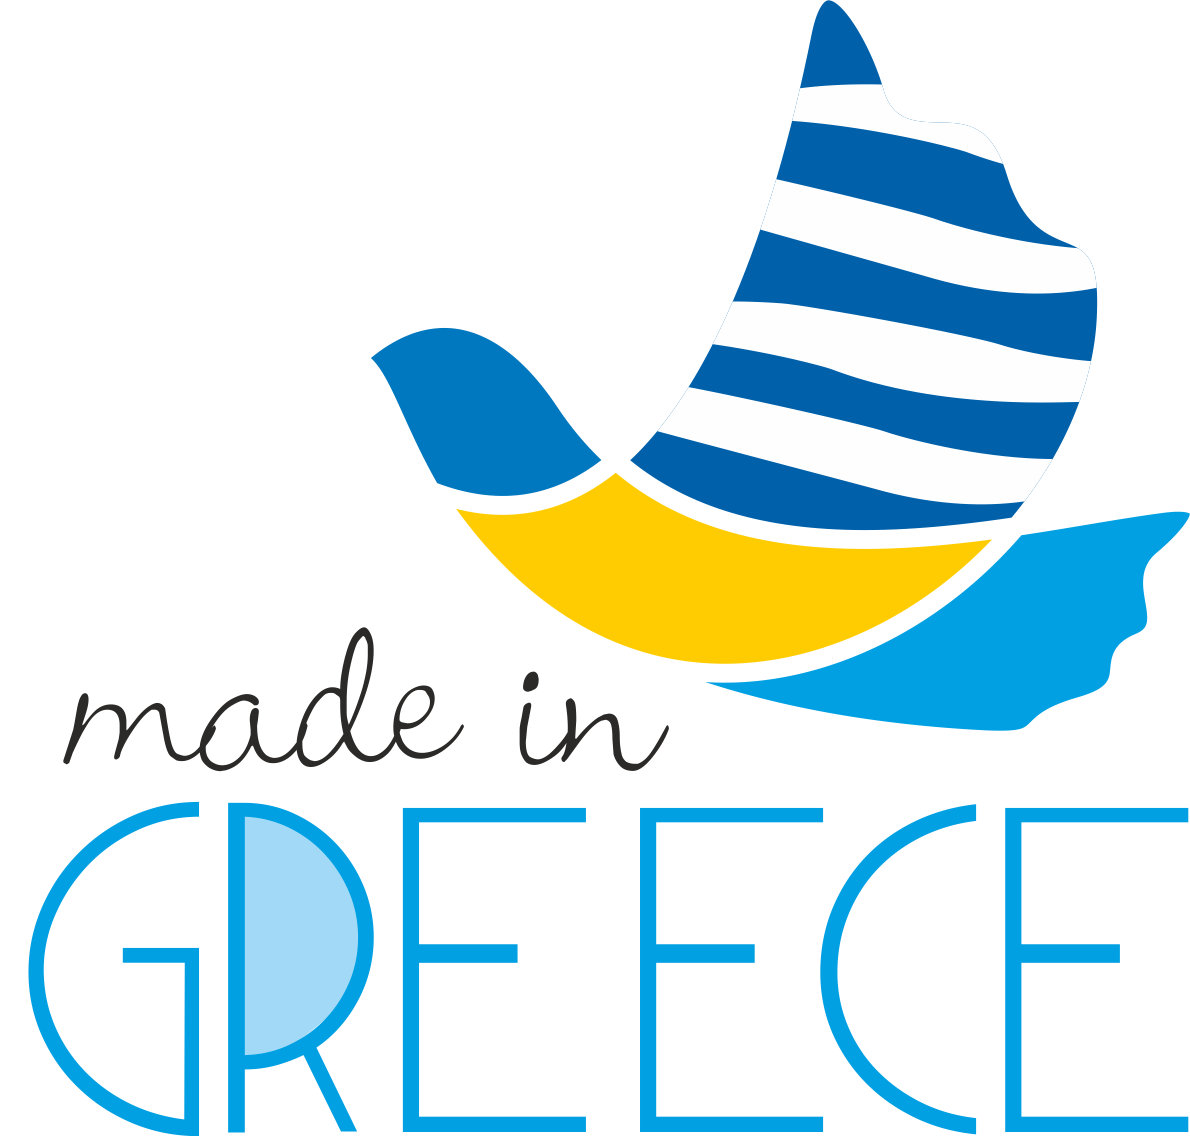 greece clipart greek root